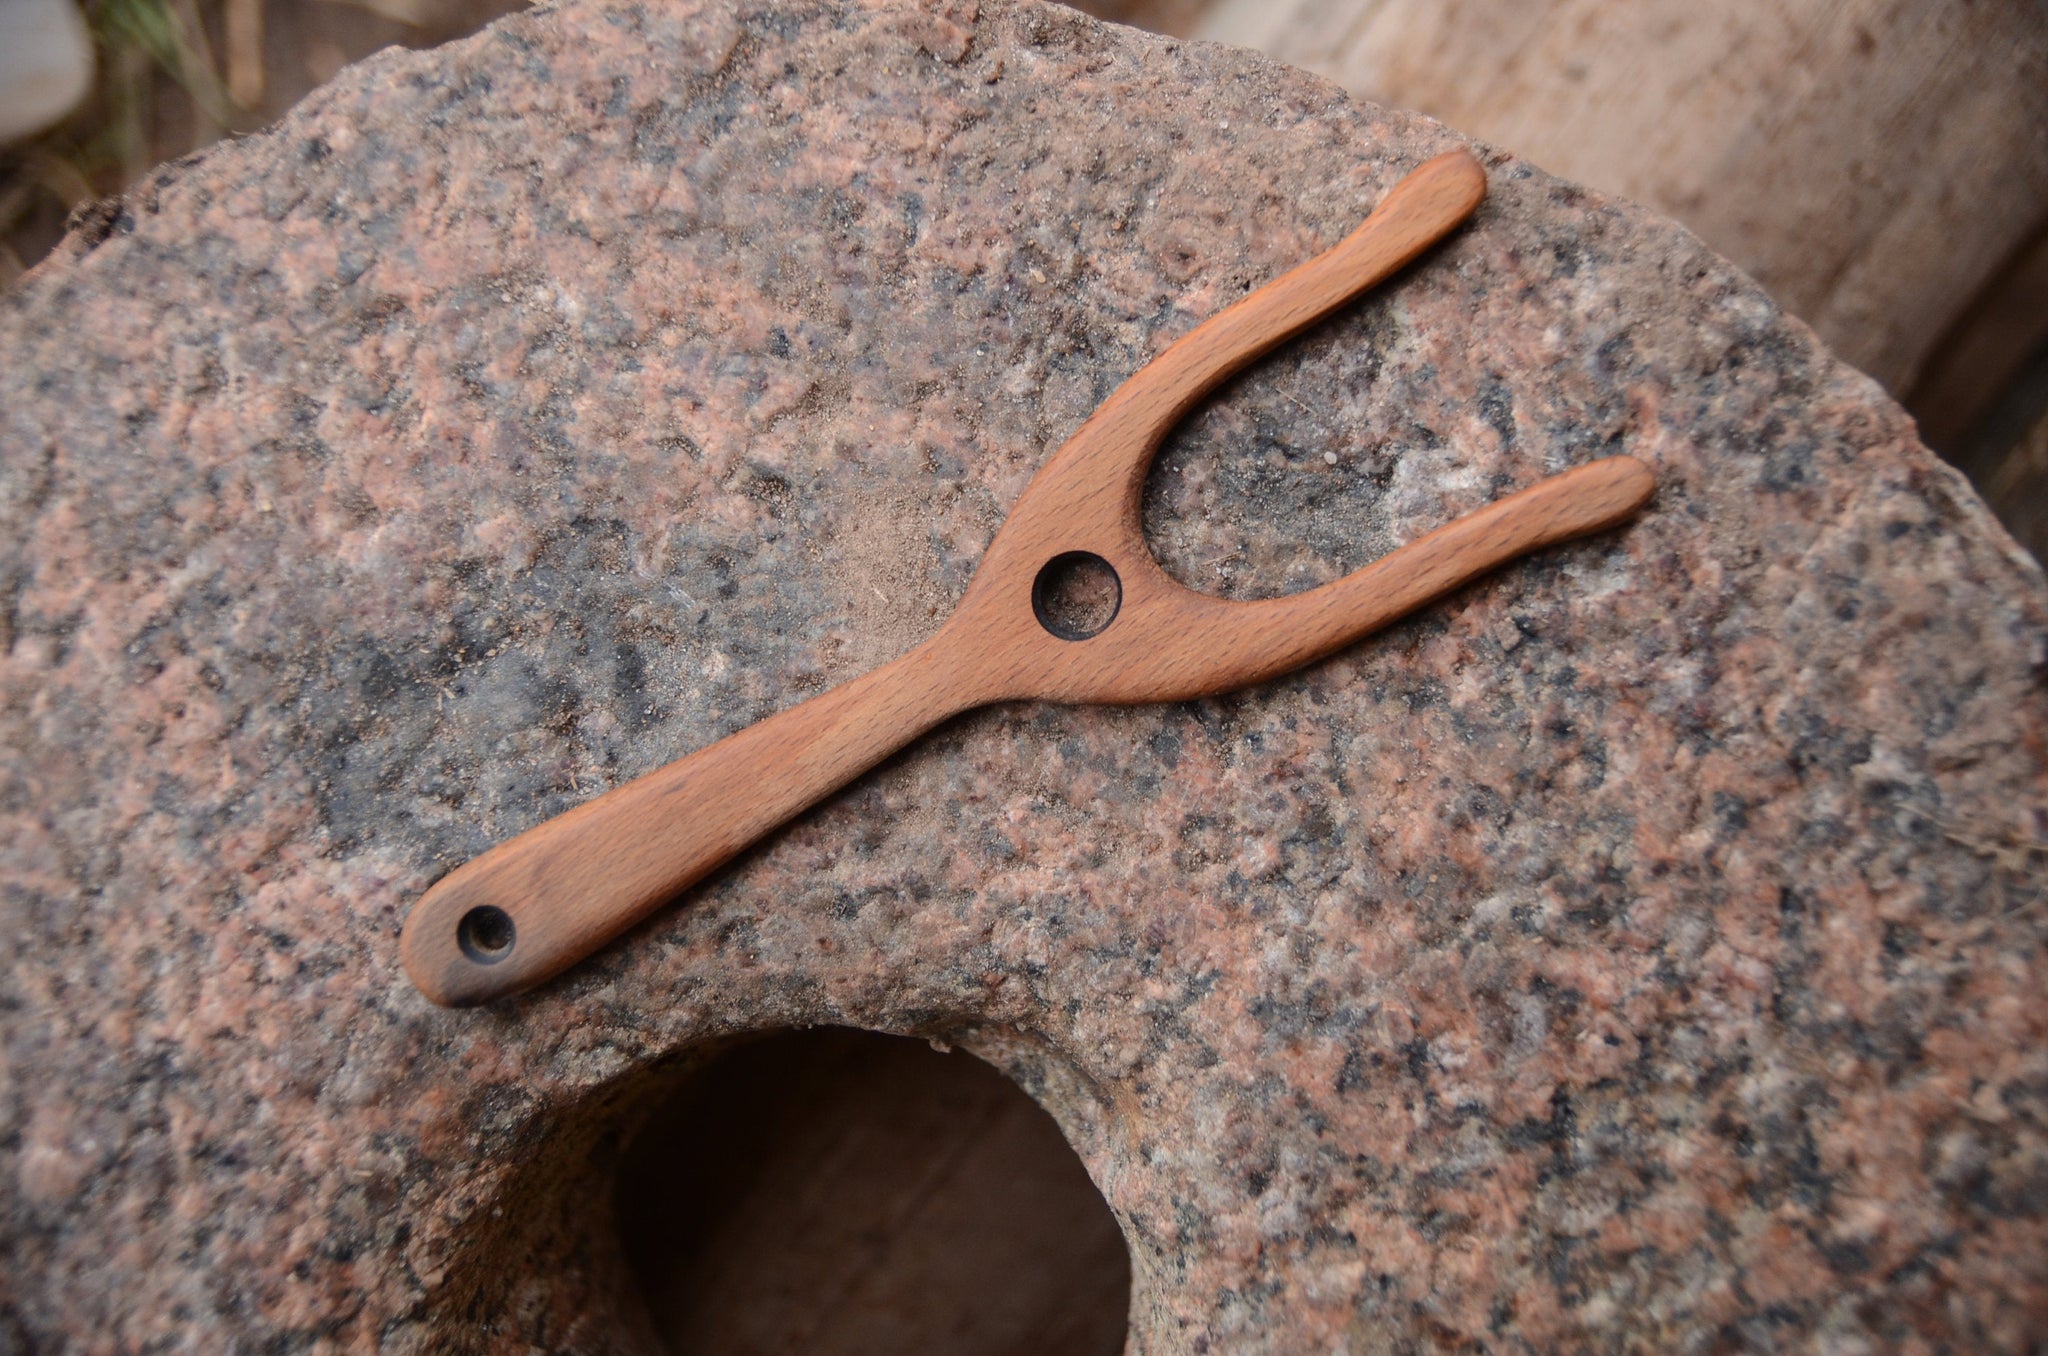 Gluckskafer Wooden Lucet Braiding Fork for Viking Cords & Rope Making —  Wooden Playroom